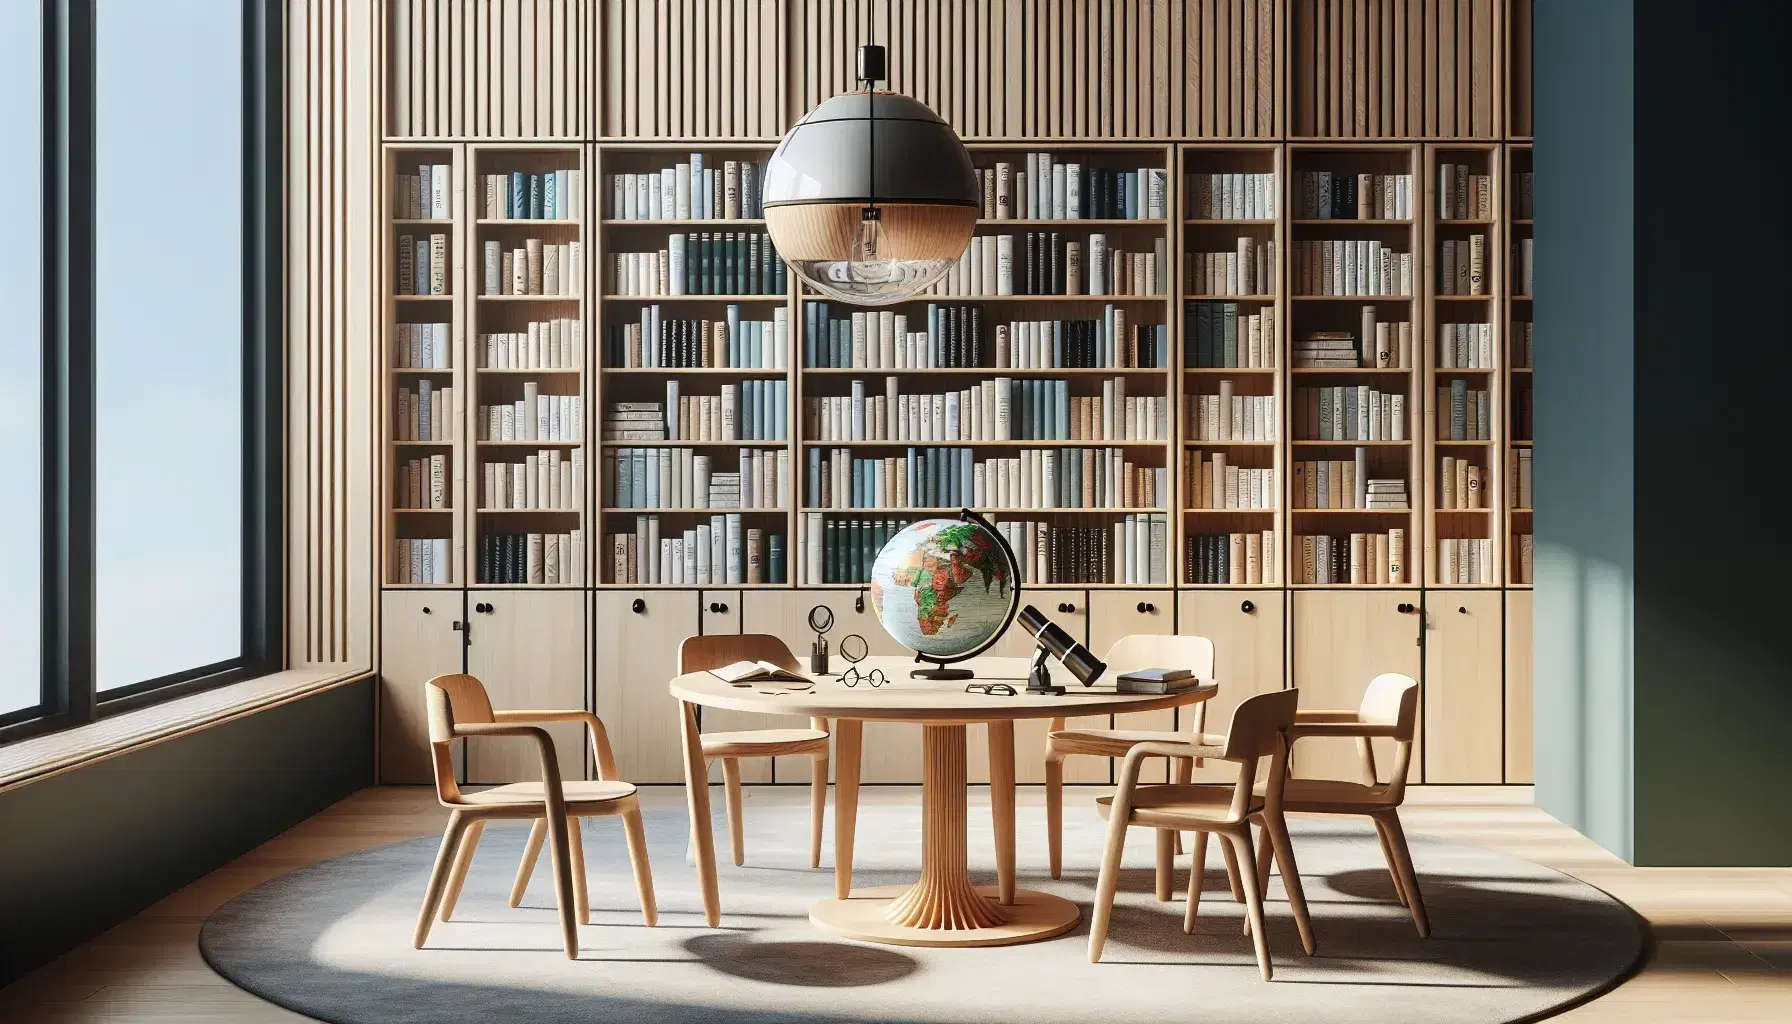 Biblioteca moderna y luminosa con estanterías de madera repletas de libros, mesa redonda con lupa, globo terráqueo, microscopio y megáfono, junto a ventana grande.